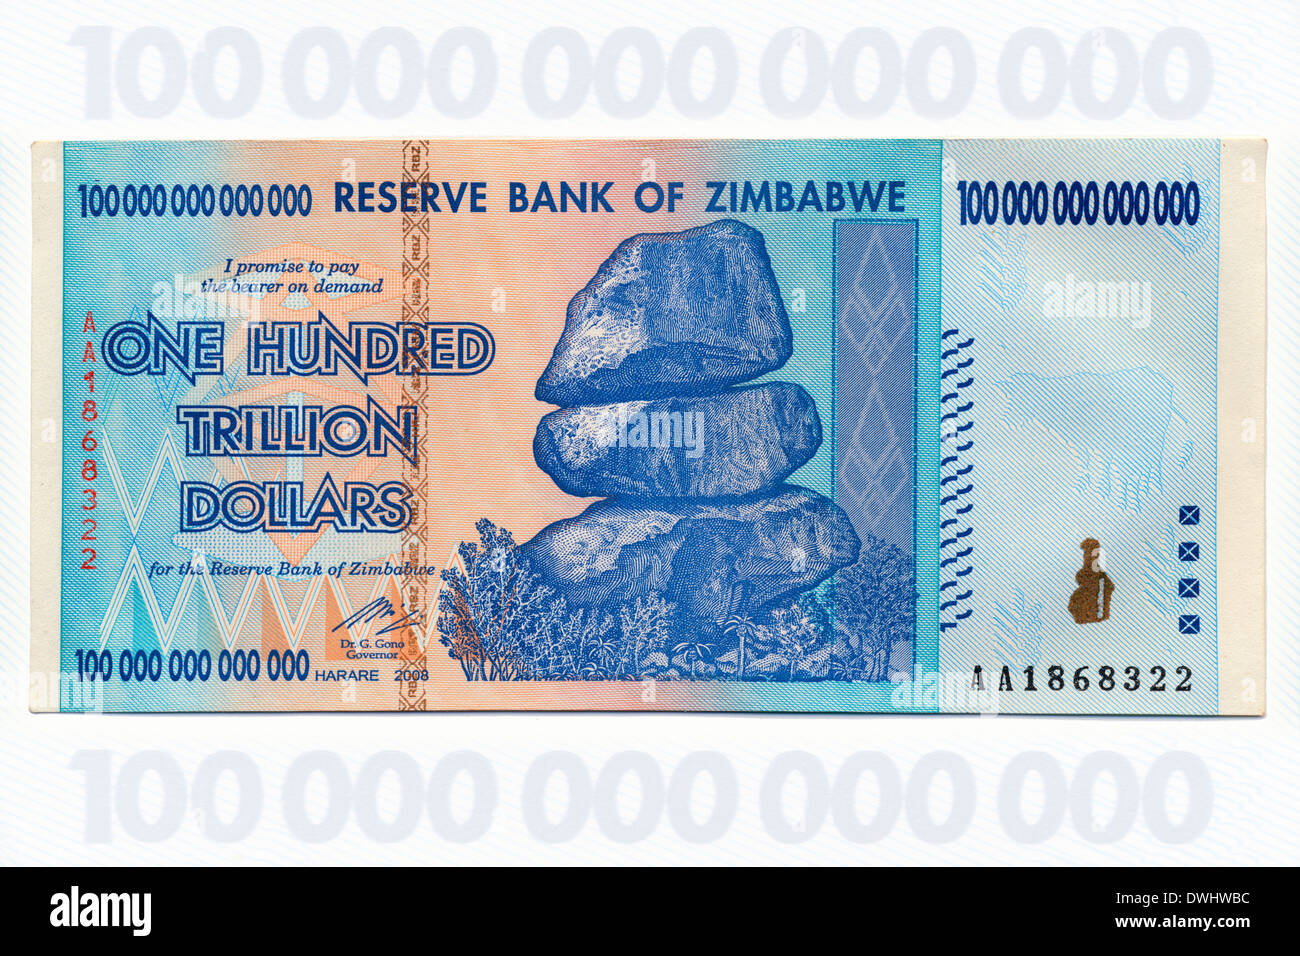 Hyperinflation - Zimbabwe. One Hundred Trillion Dollar Banknote Stock Photo